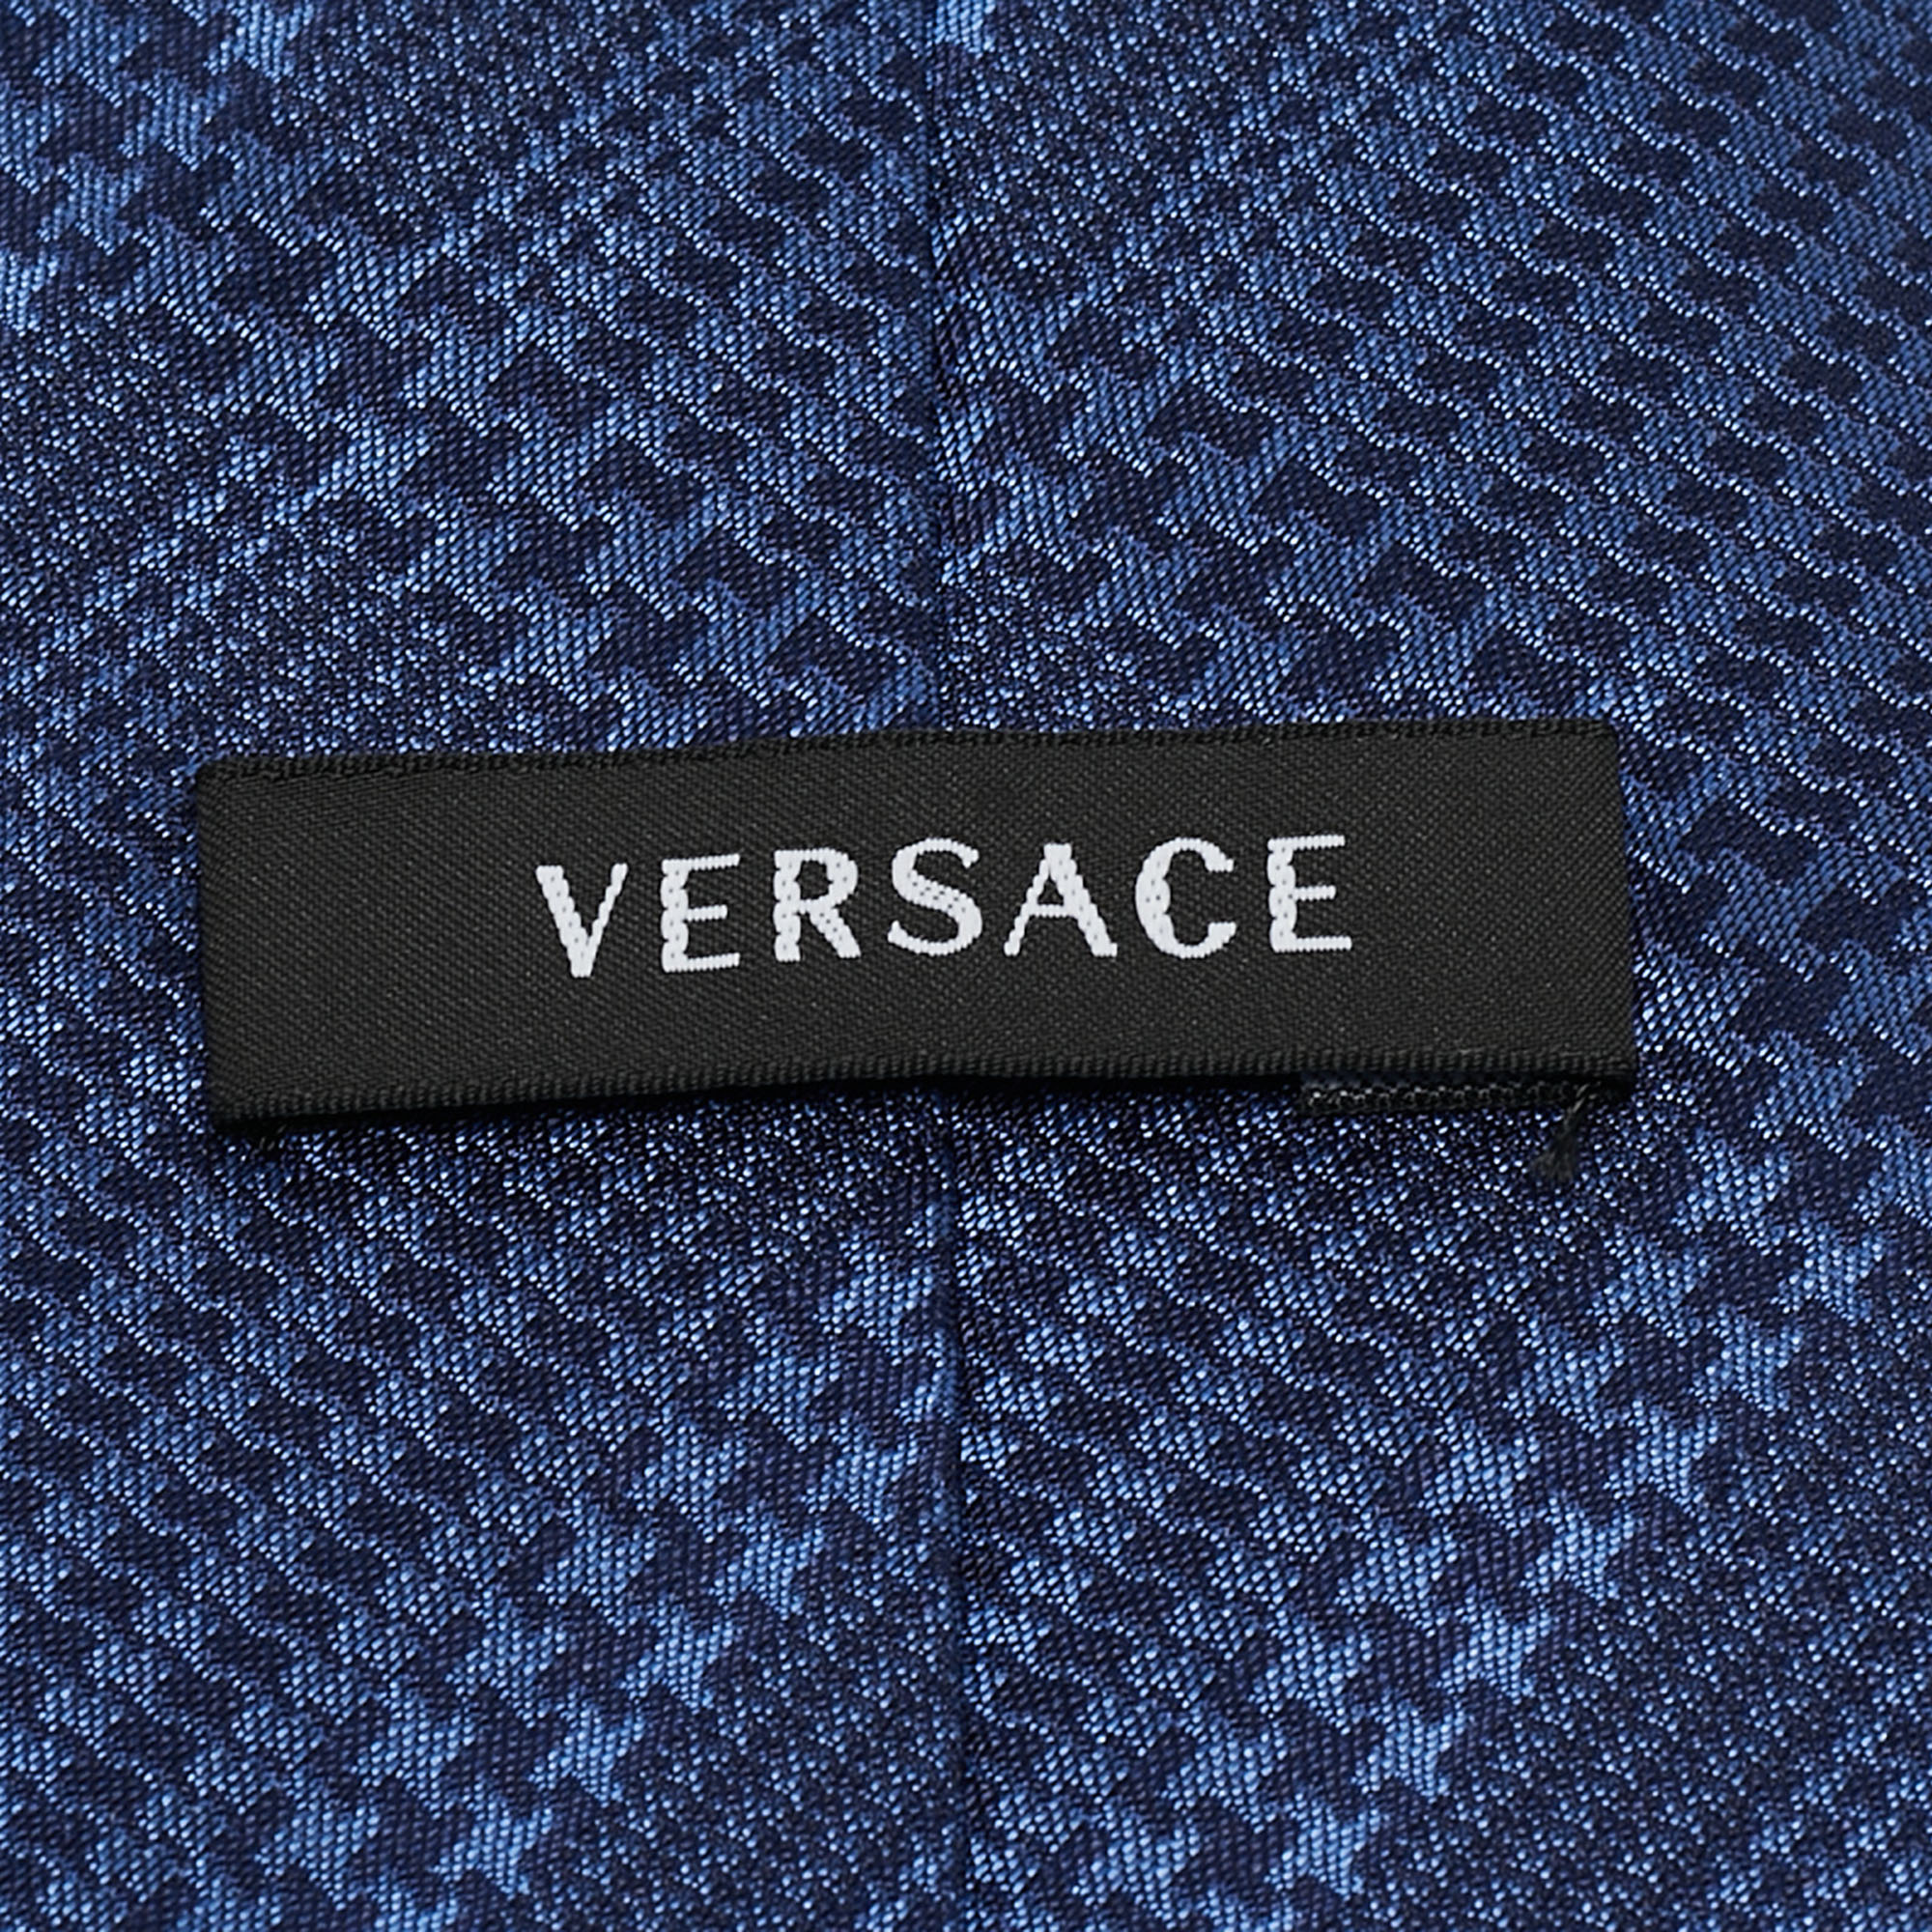 Versace Blue Diagonal Check Patterned Silk Tie